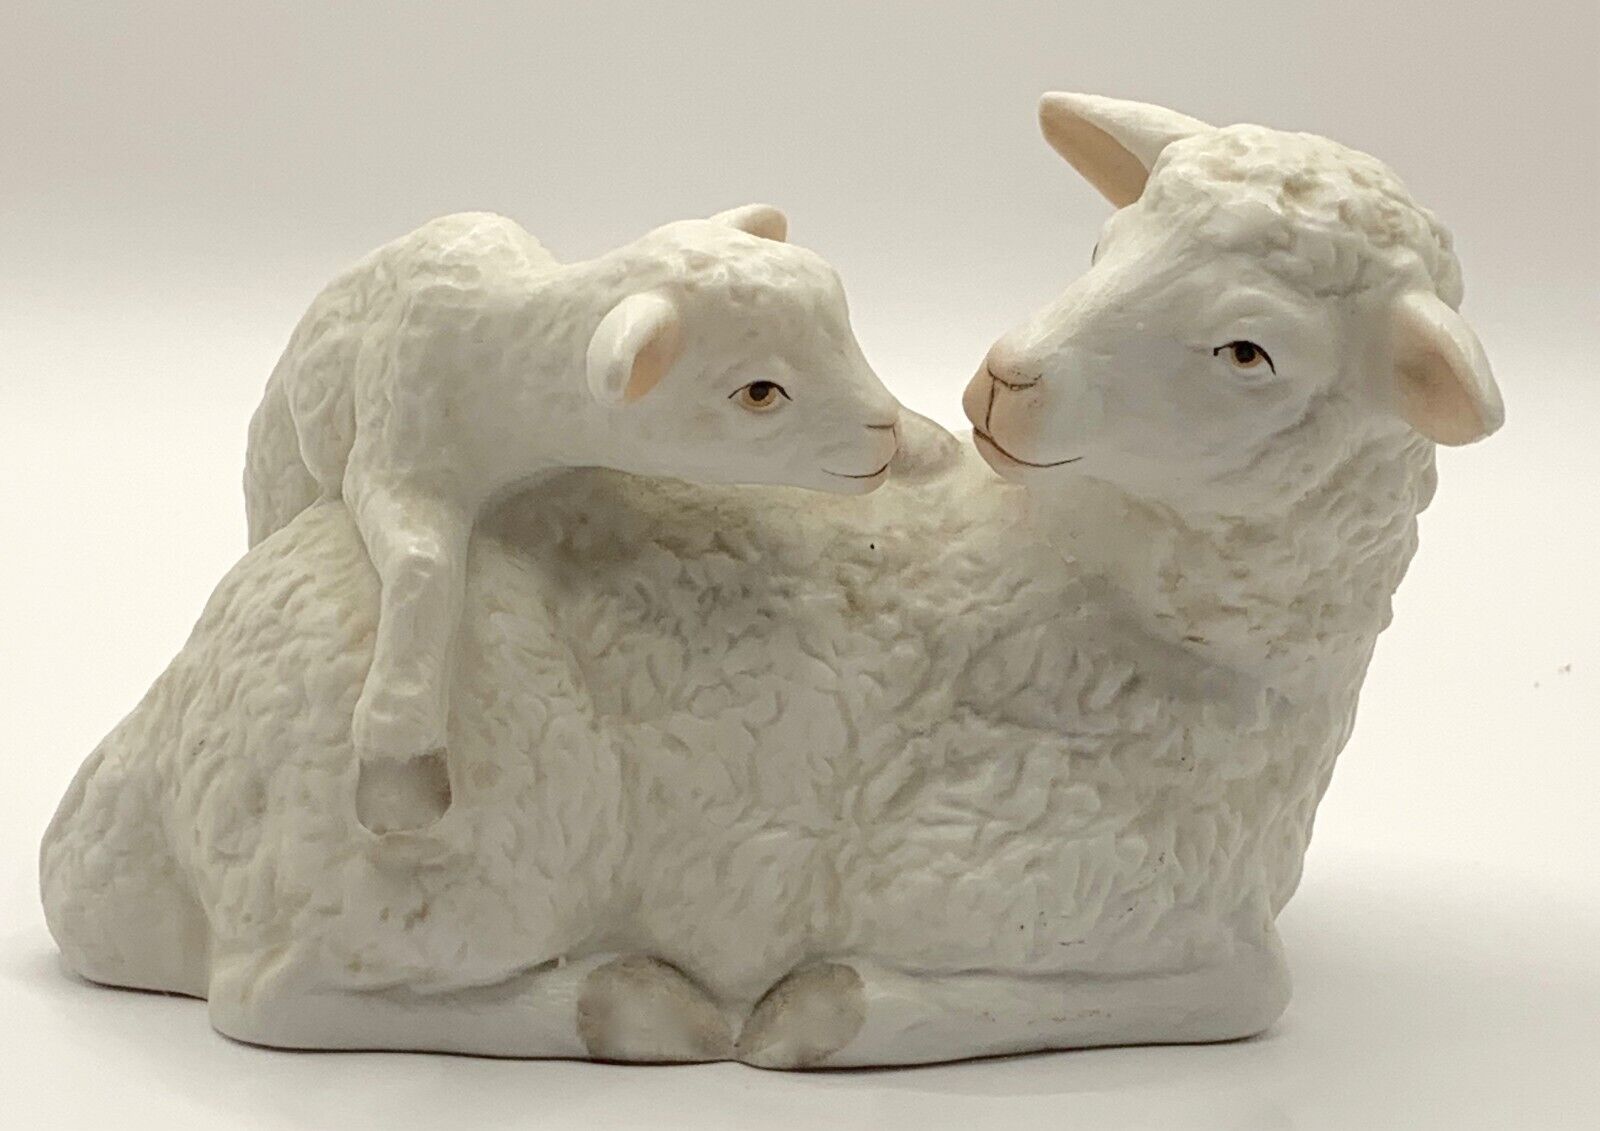 1987 ENESCO GENUINE BISQUE PORCELAIN SHEEP/LAMB/EWE WITH BABY ORIGINAL ENESCO